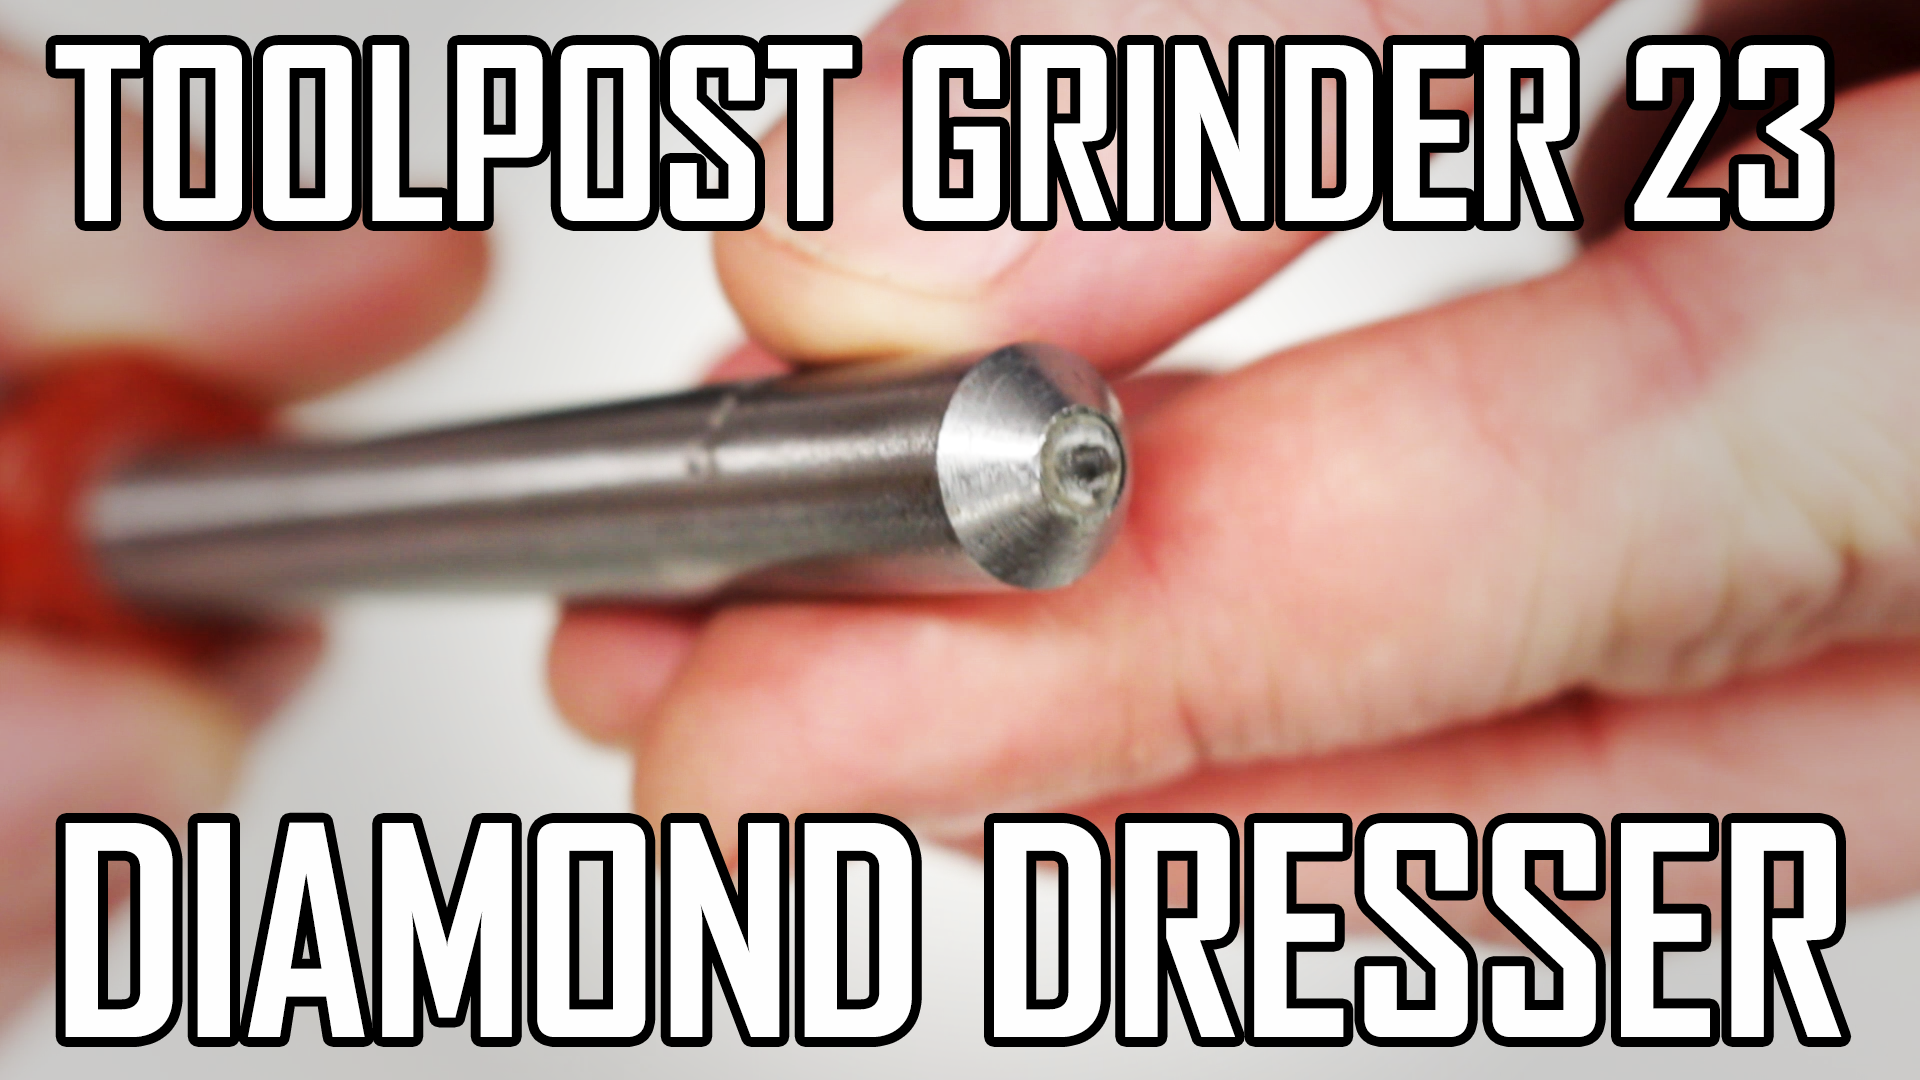 Toolpost Grinder Part 23: Diamond Wheel Dresser